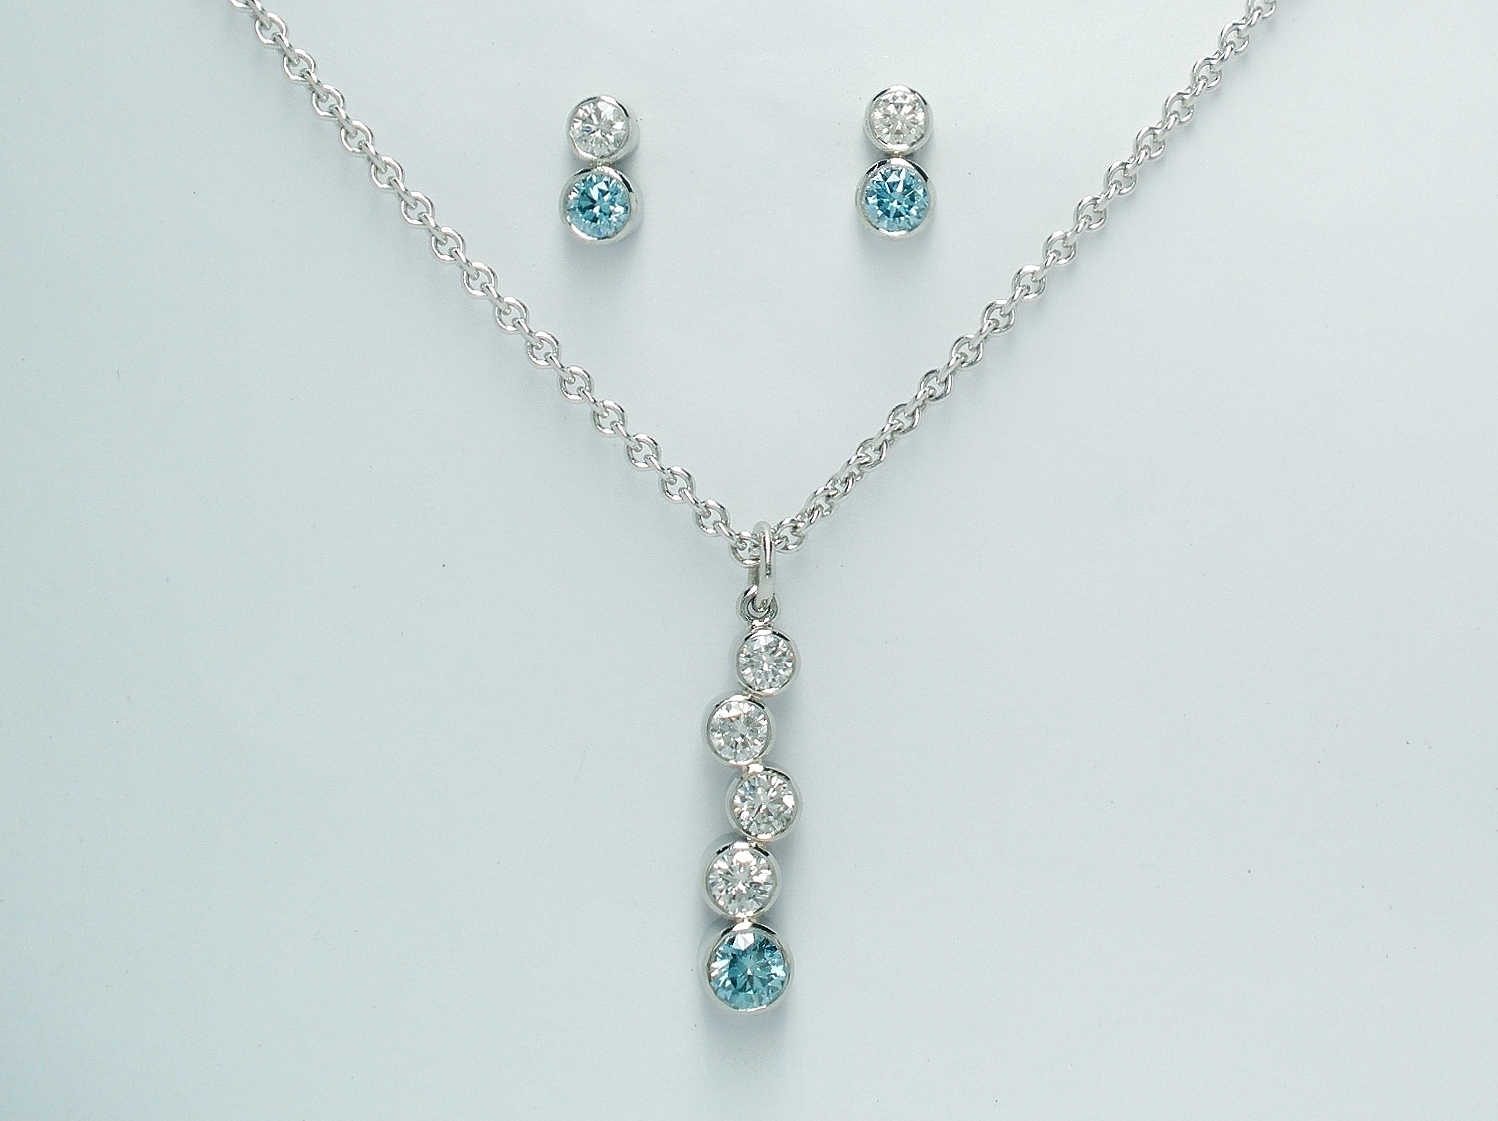 The 5 stone sky blue and white tumble pendant along with the complimenting 2 stone sky blue and white diamond ear studs